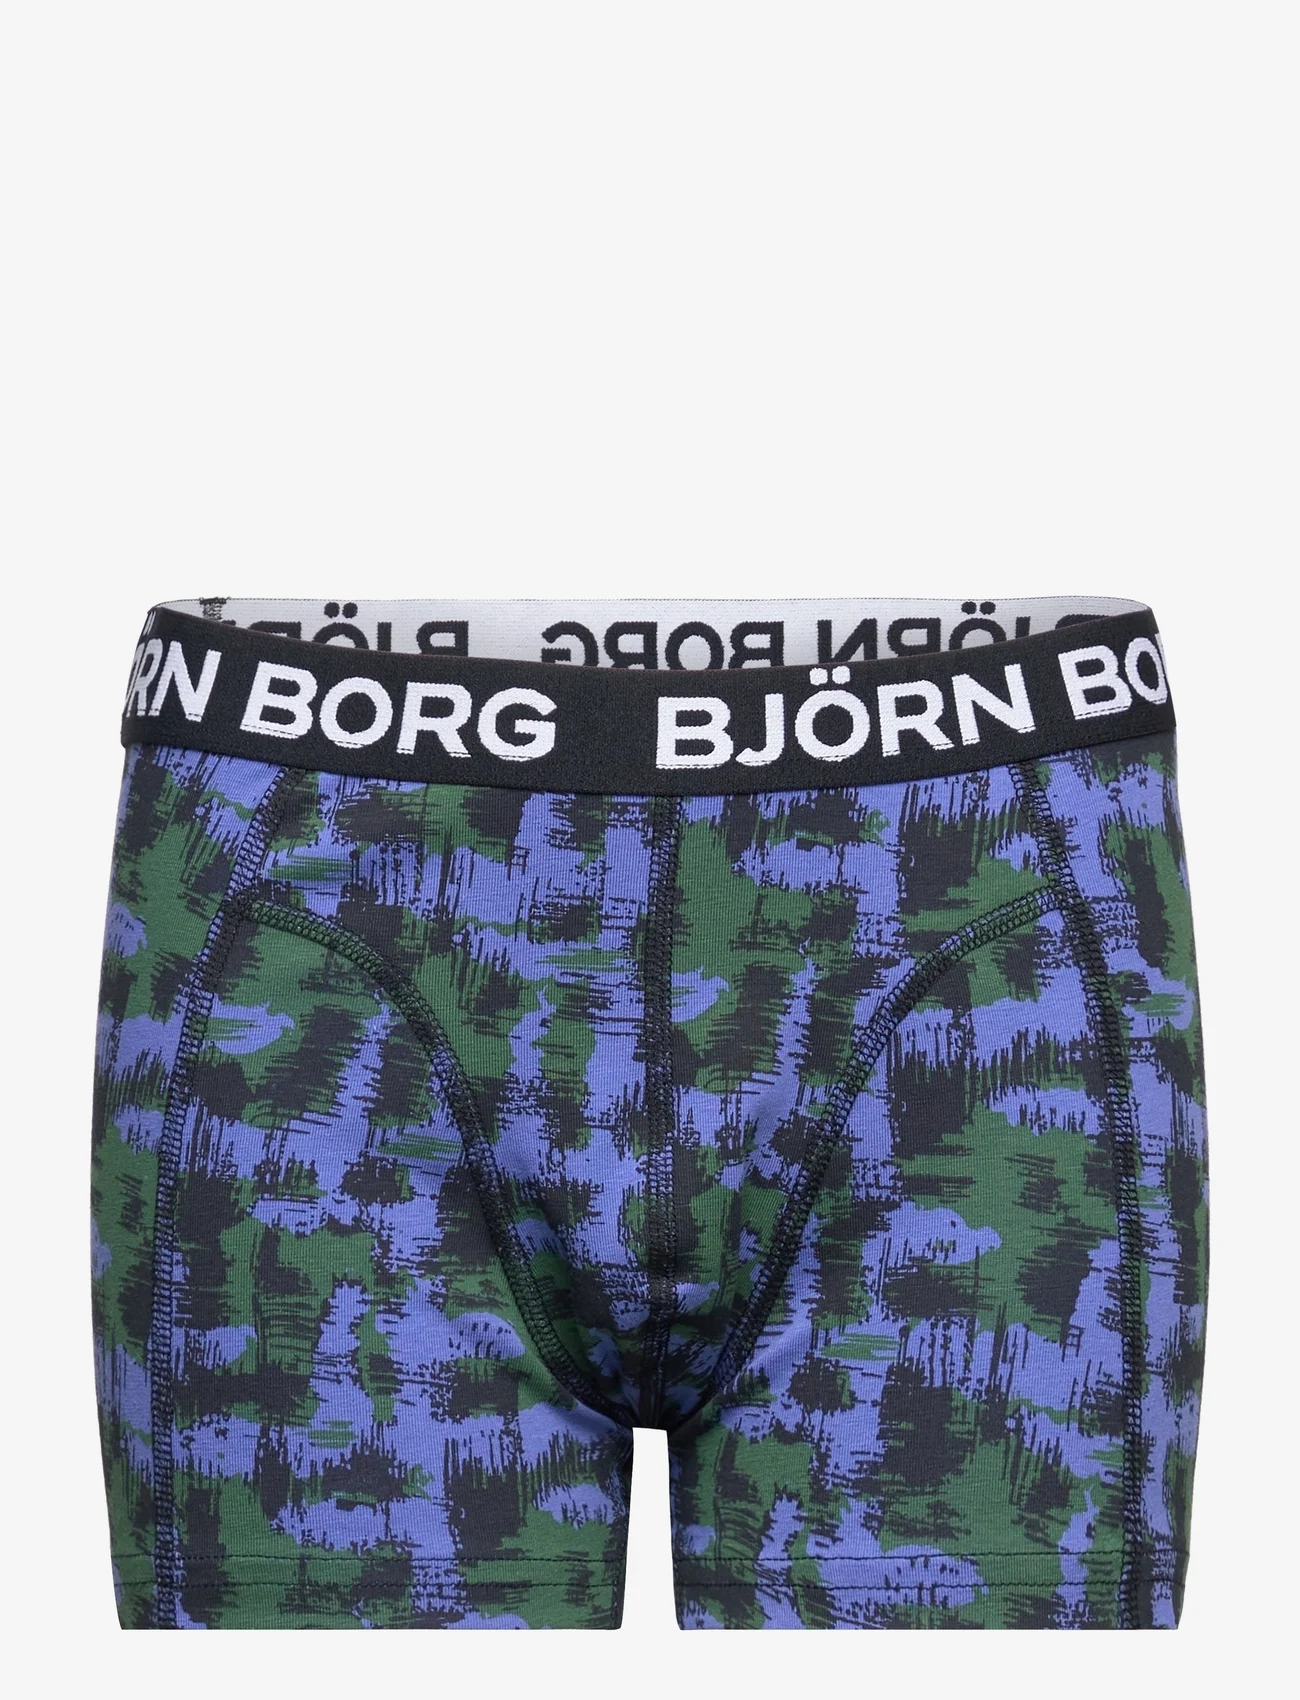 Björn Borg - CORE BOXER 2p - underpants - multipack 1 - 1